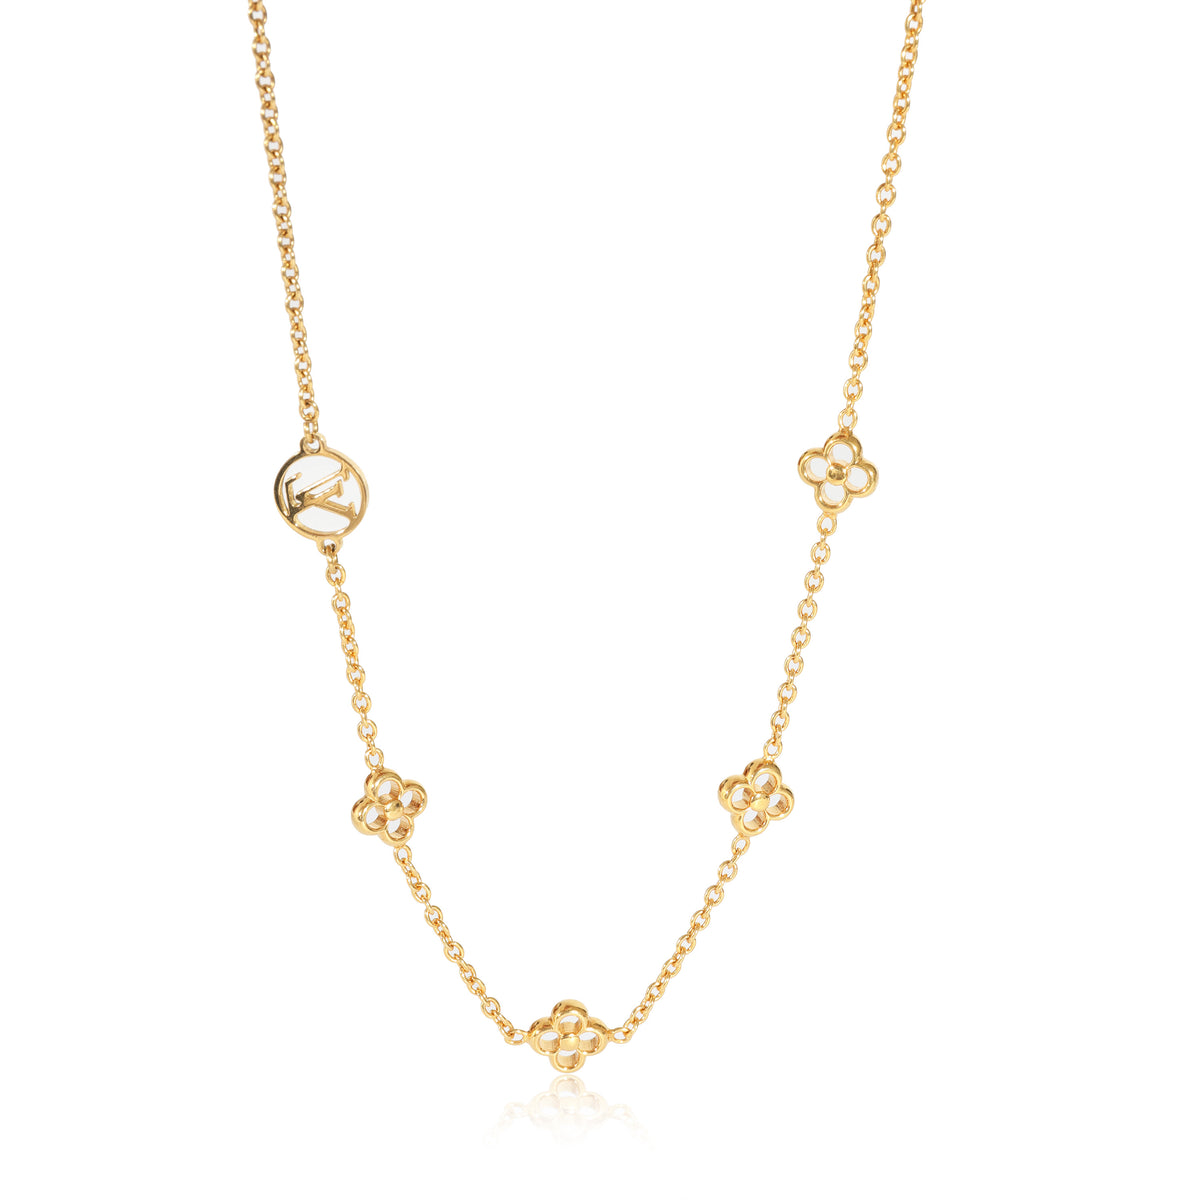 Louis Vuitton - Authenticated Monogram Necklace - Metal Gold for Women, Good Condition